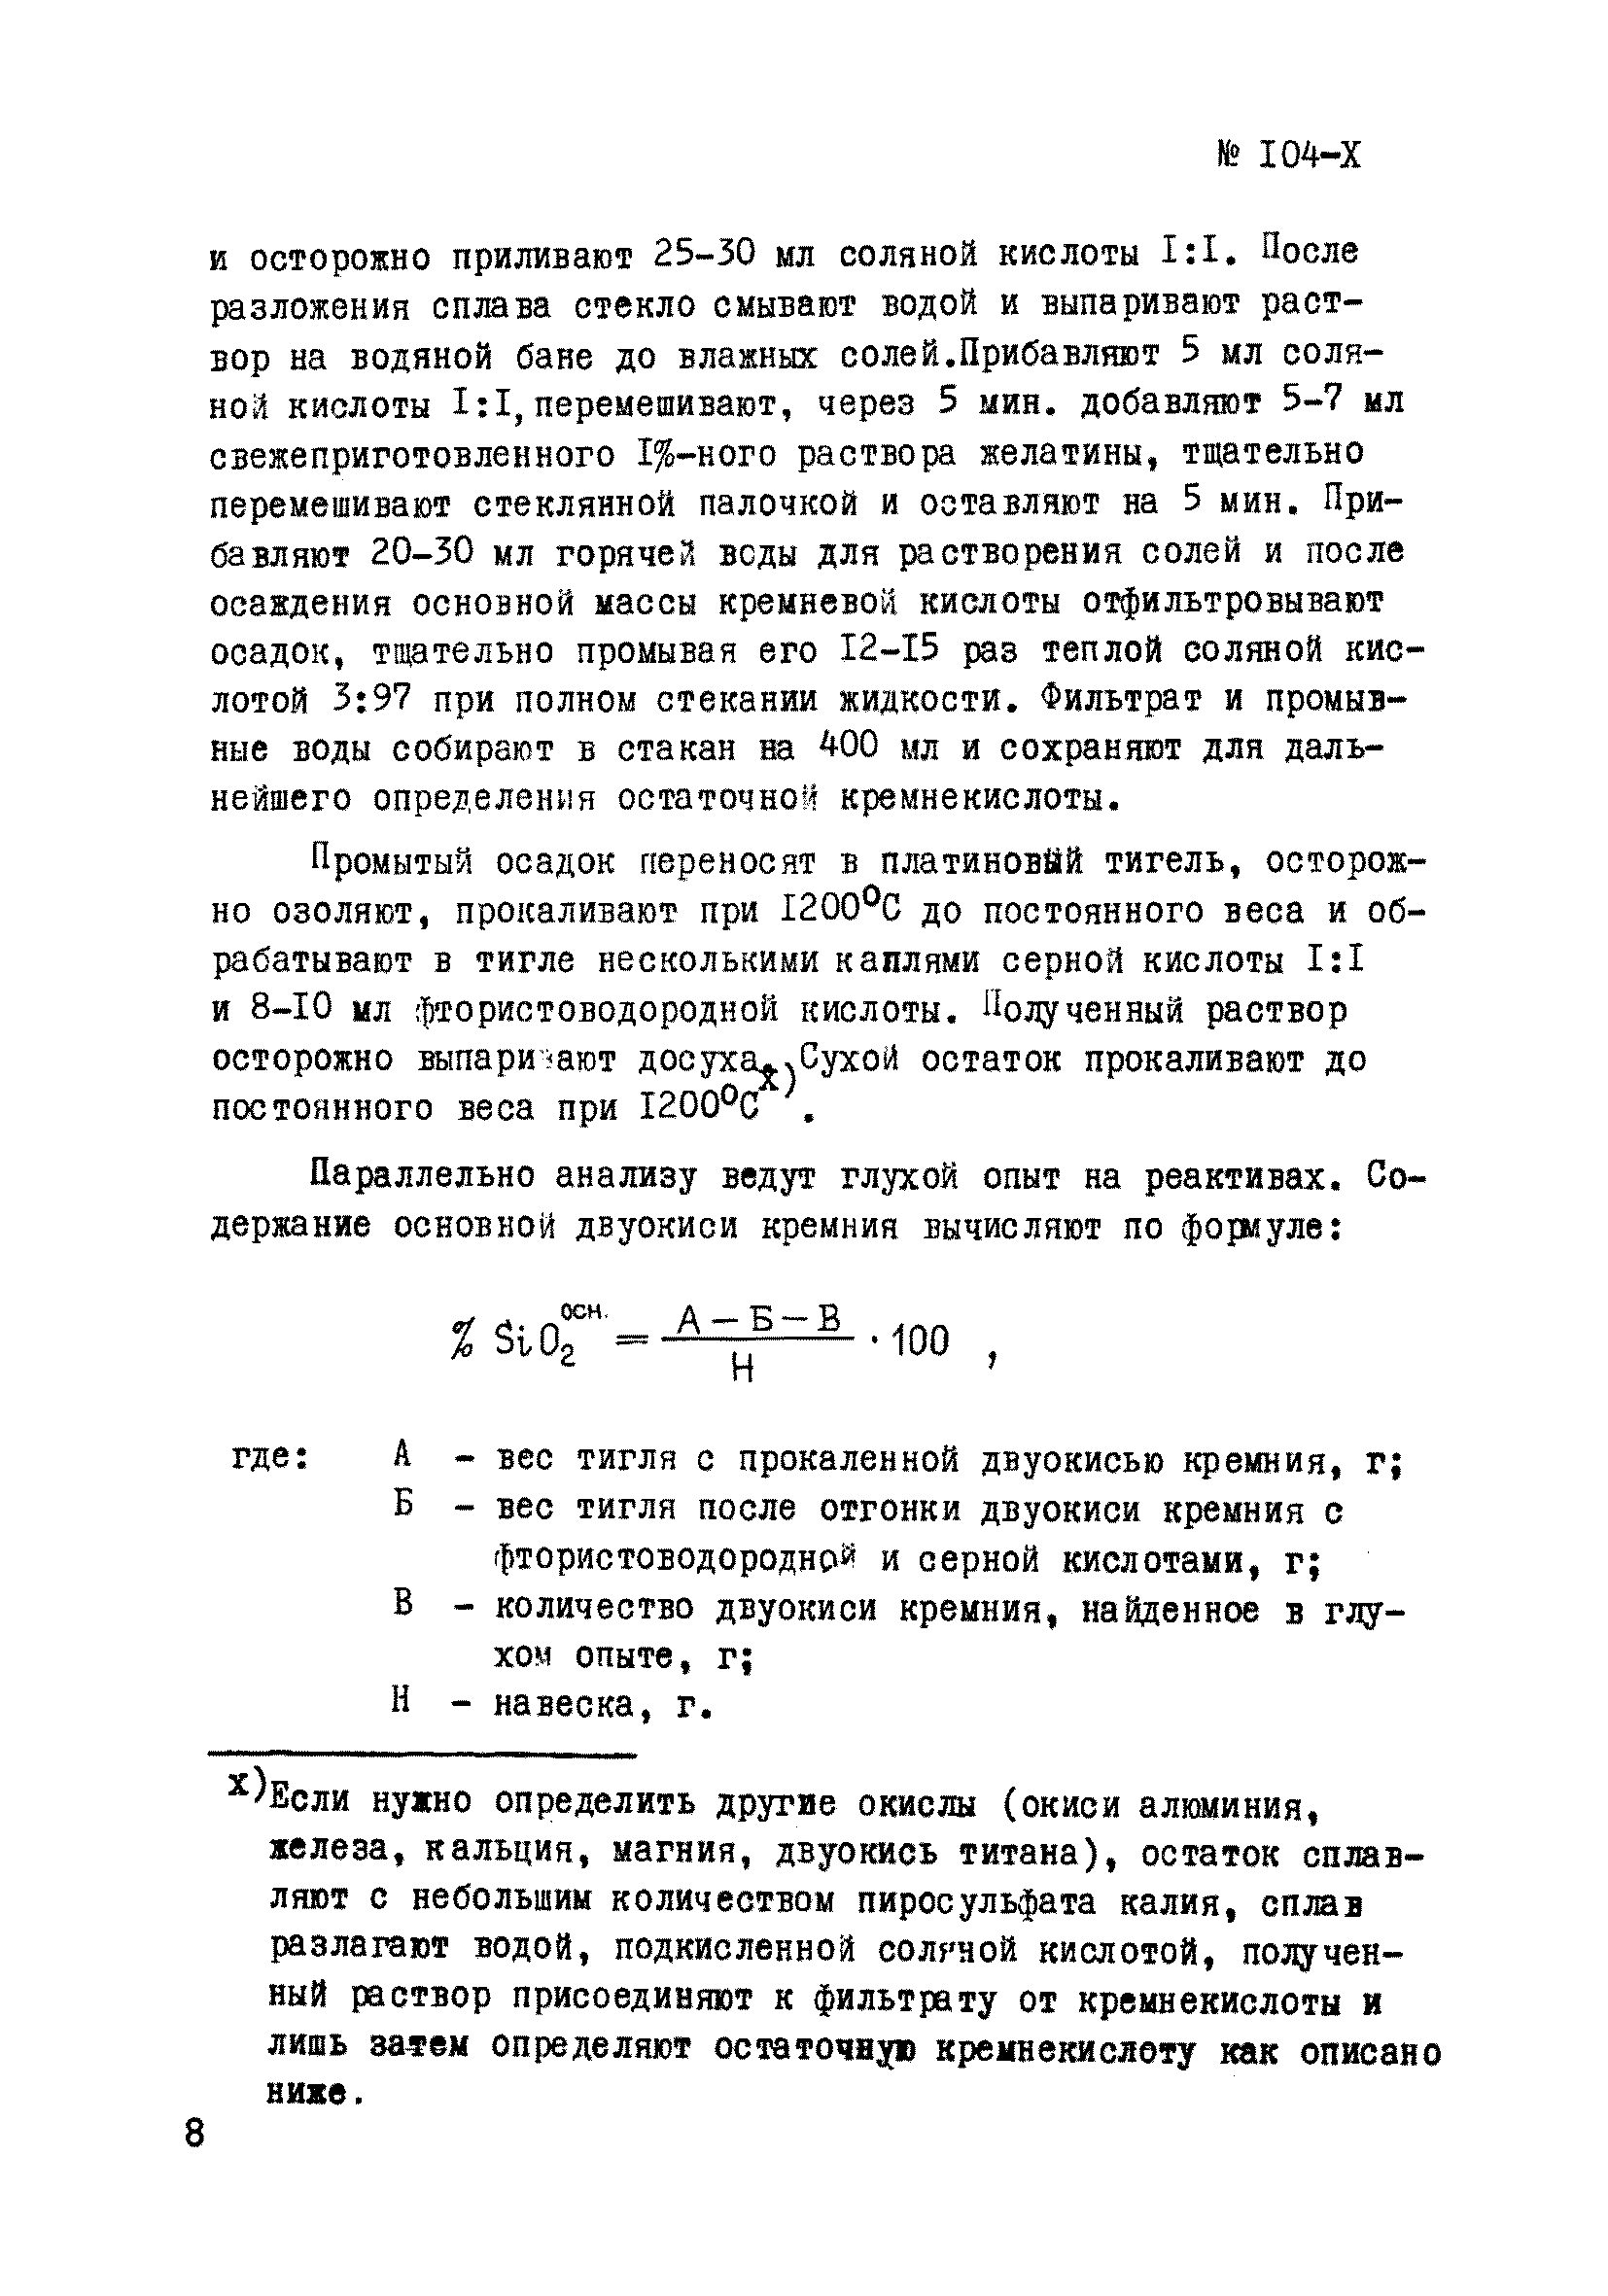 Инструкция НСАМ 104-Х